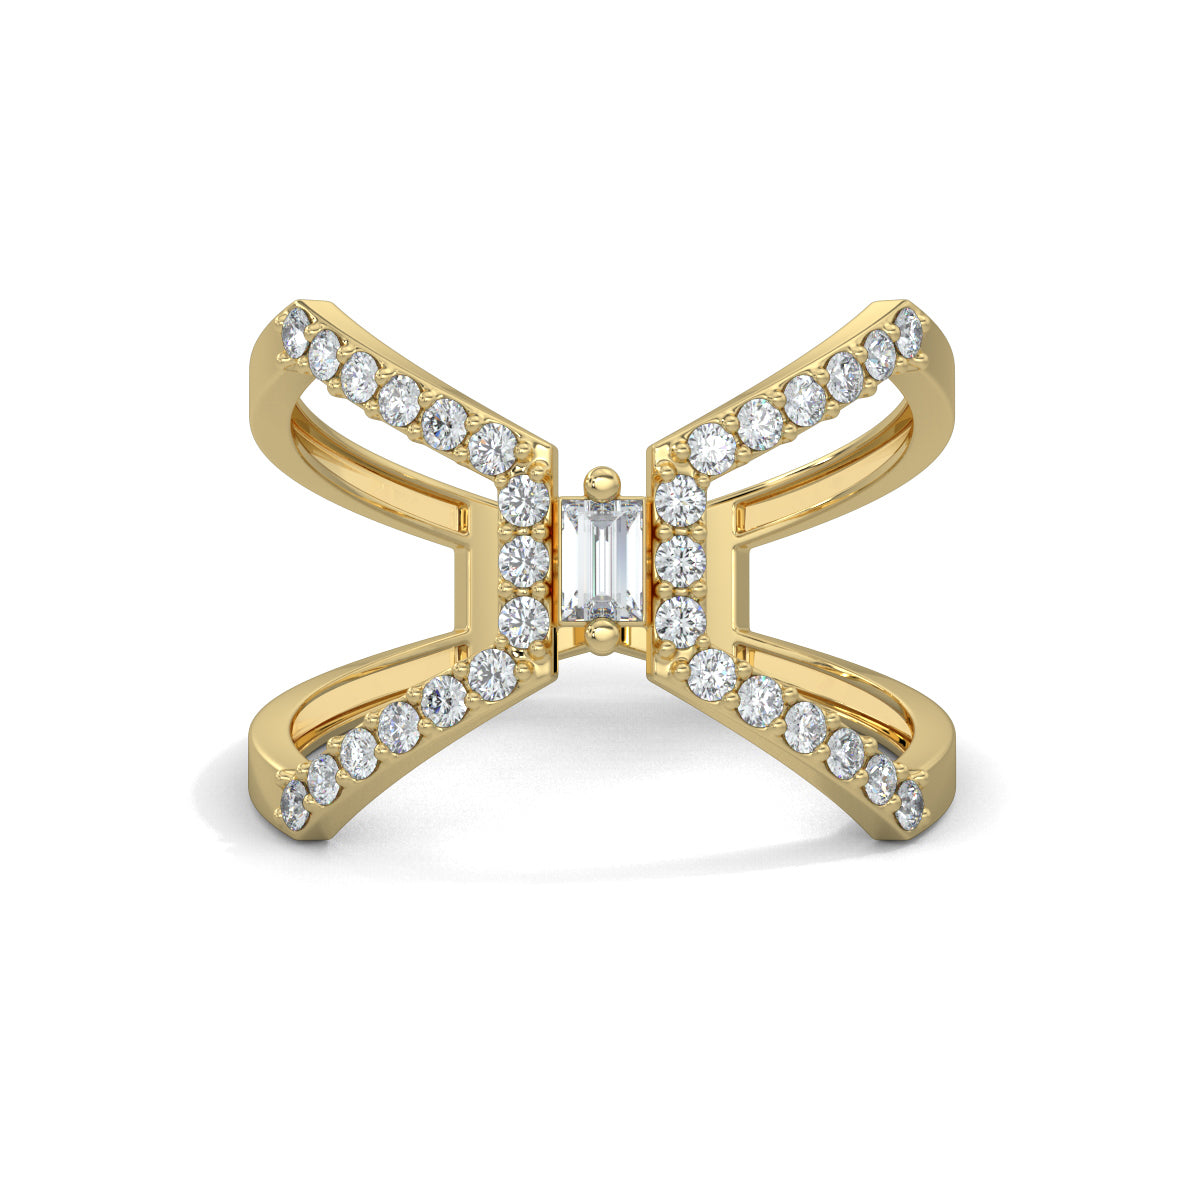 Yellow Gold, Diamond Ring, Natural diamond ring, Lab-grown diamond ring, everyday ring, split shank design, butterfly ring, baguette diamond, round diamonds, fashion jewelry, exquisite elegance.